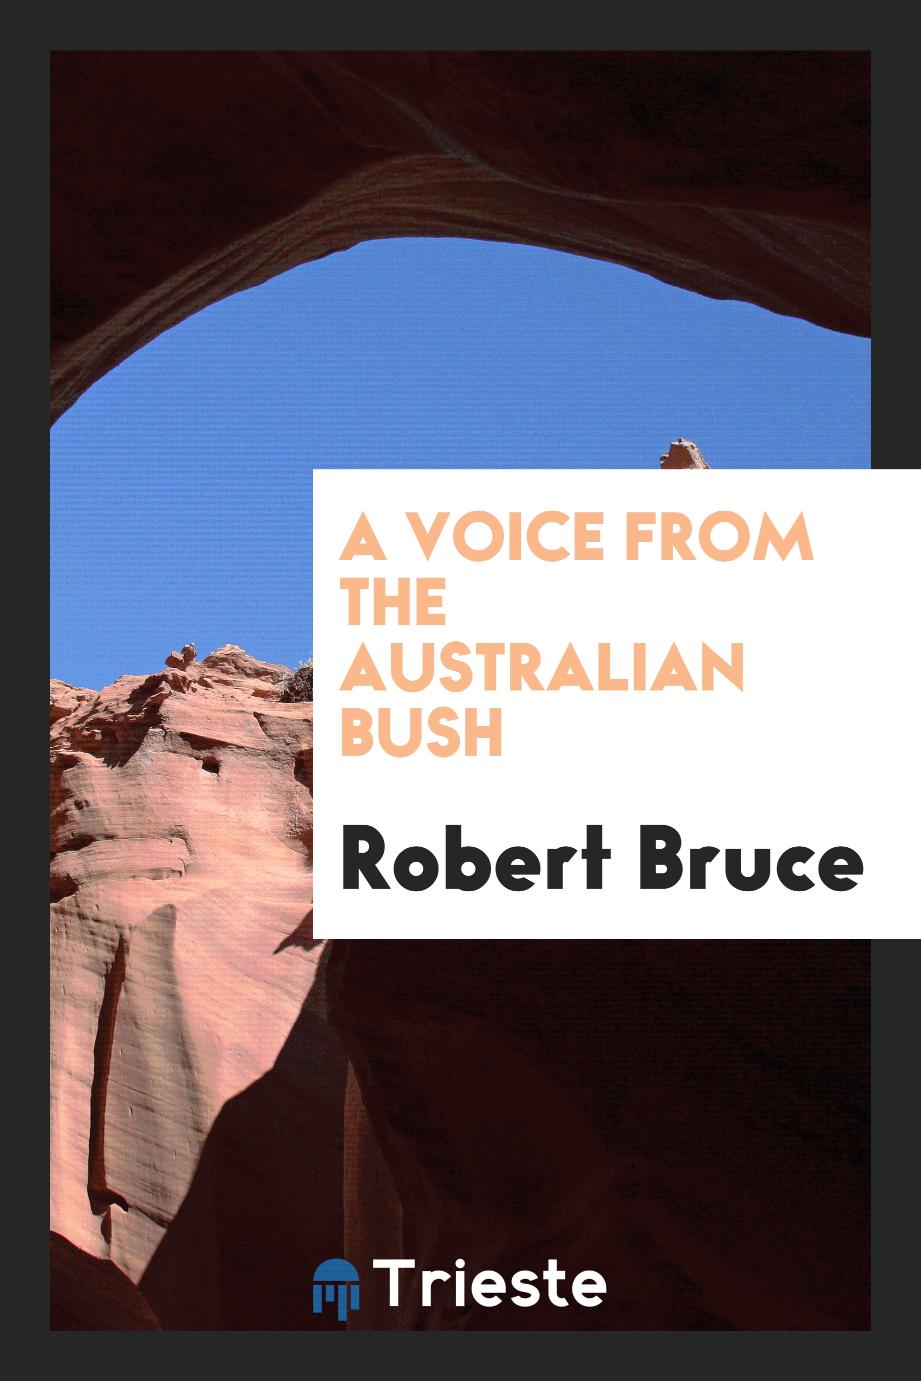 A voice from the Australian bush